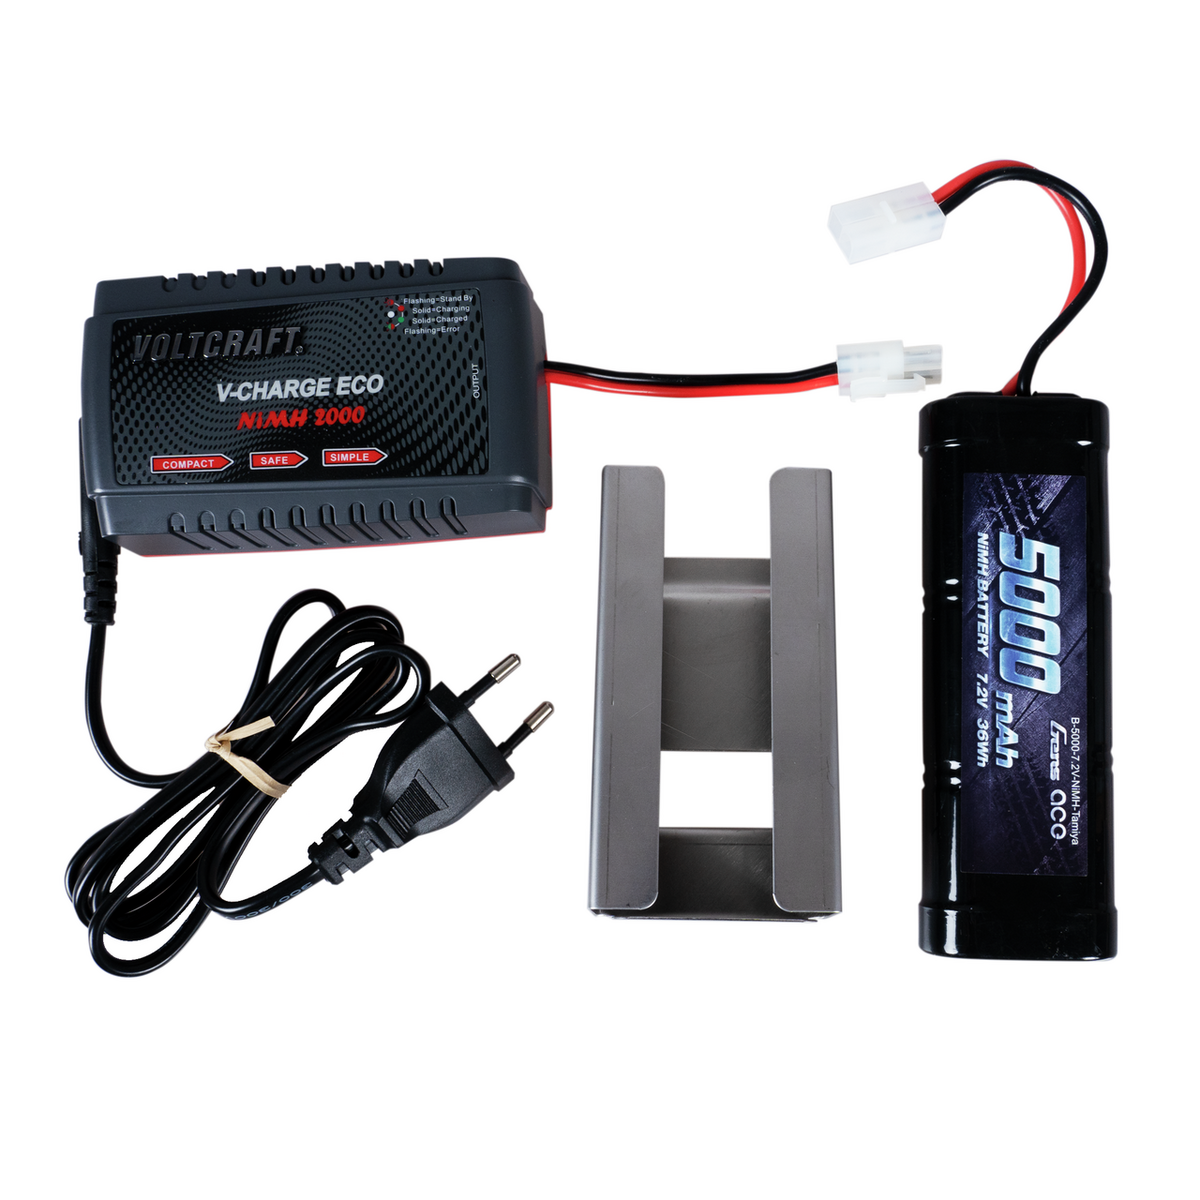 Praesidio rechargeable battery retrofit kit